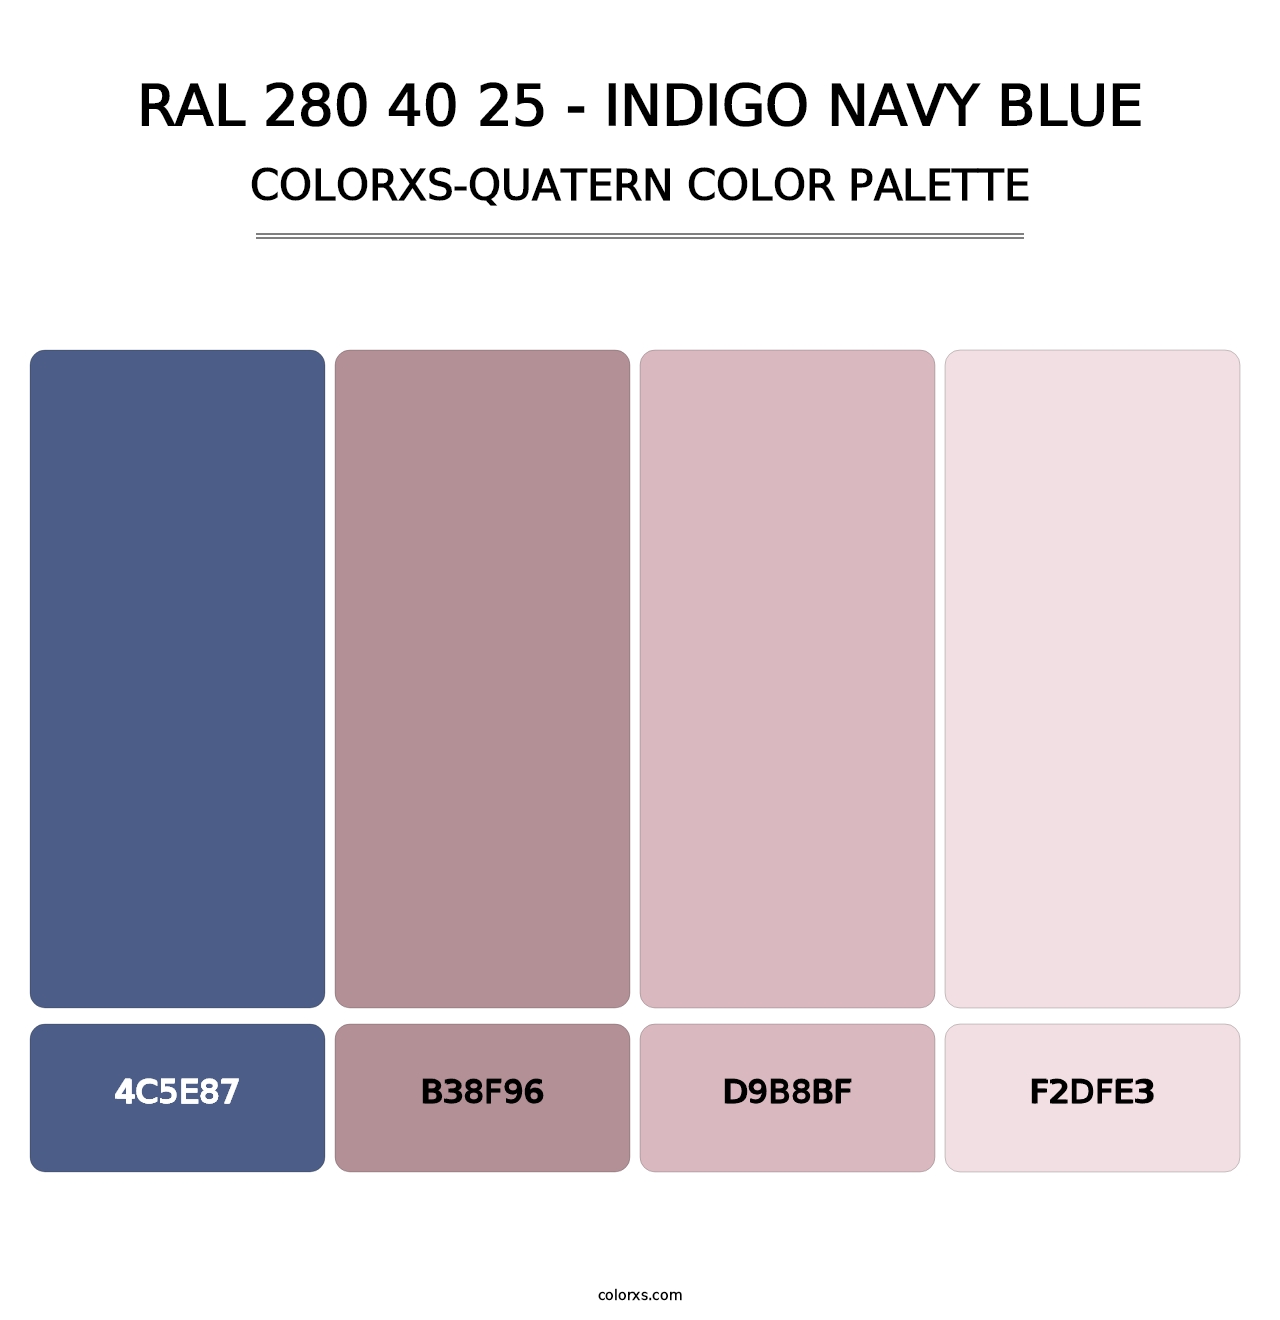 RAL 280 40 25 - Indigo Navy Blue - Colorxs Quatern Palette